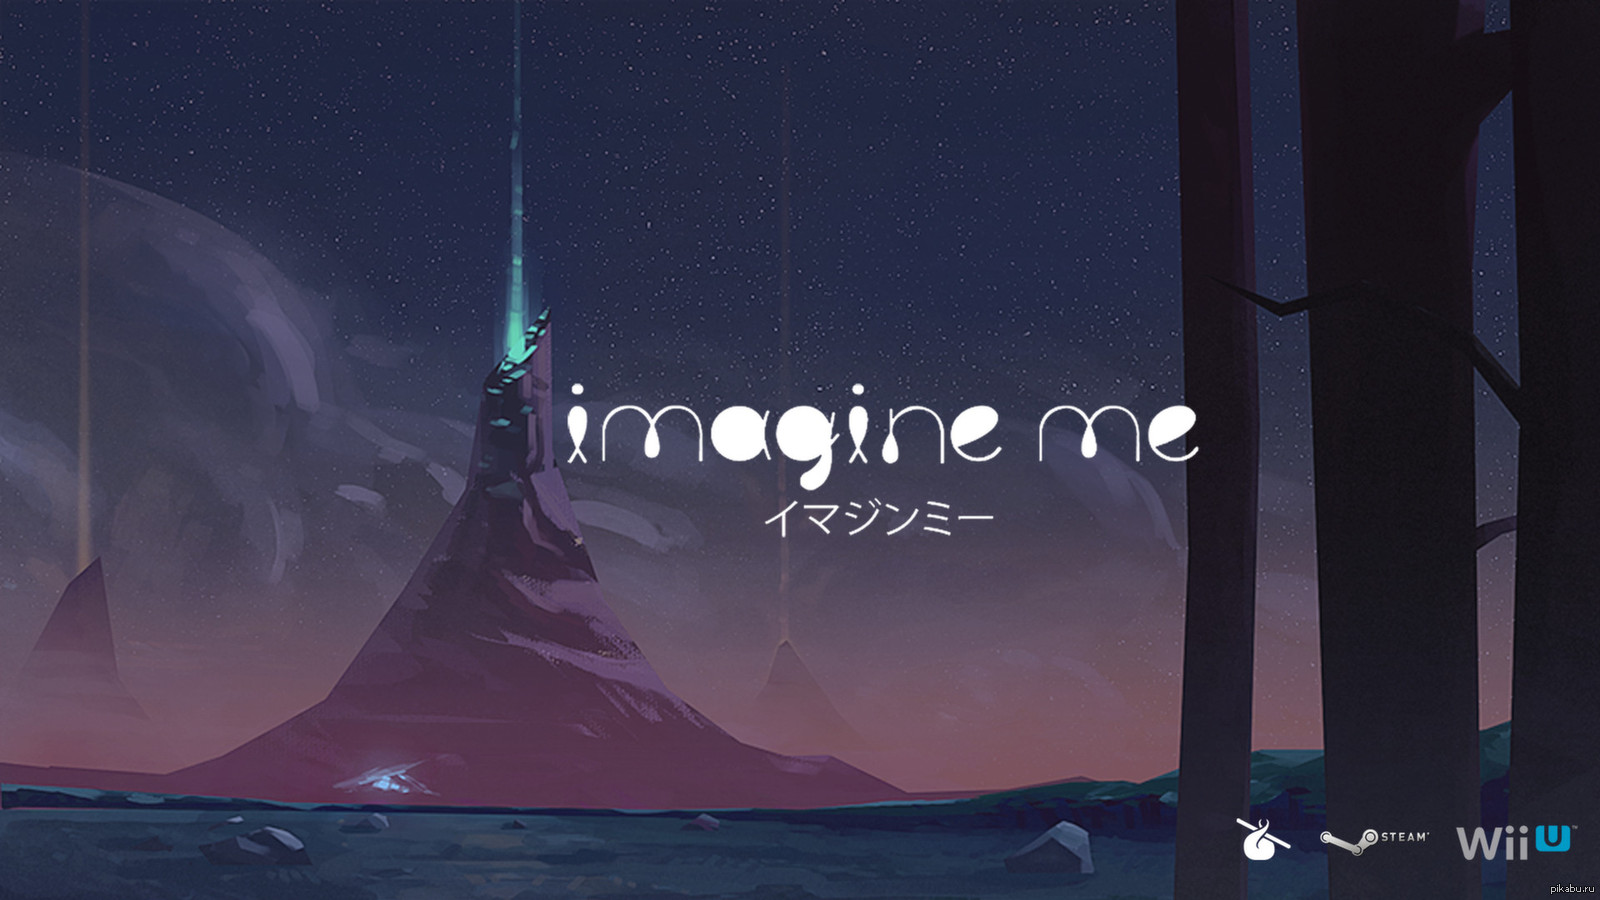 Игра imagines. Imagine игра. Инди игра imagine. Game imagine Steam. Игра imagine Word.